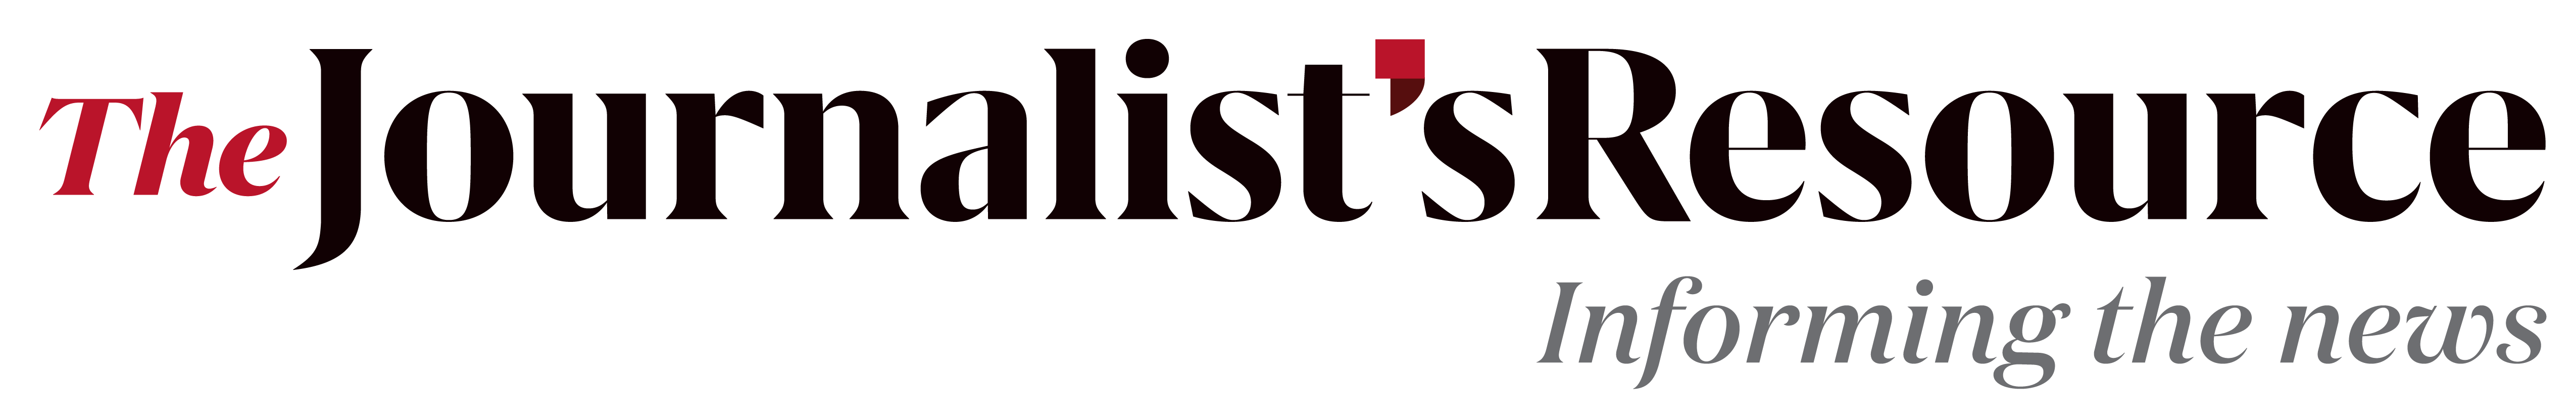 The Journalist's Resource logo